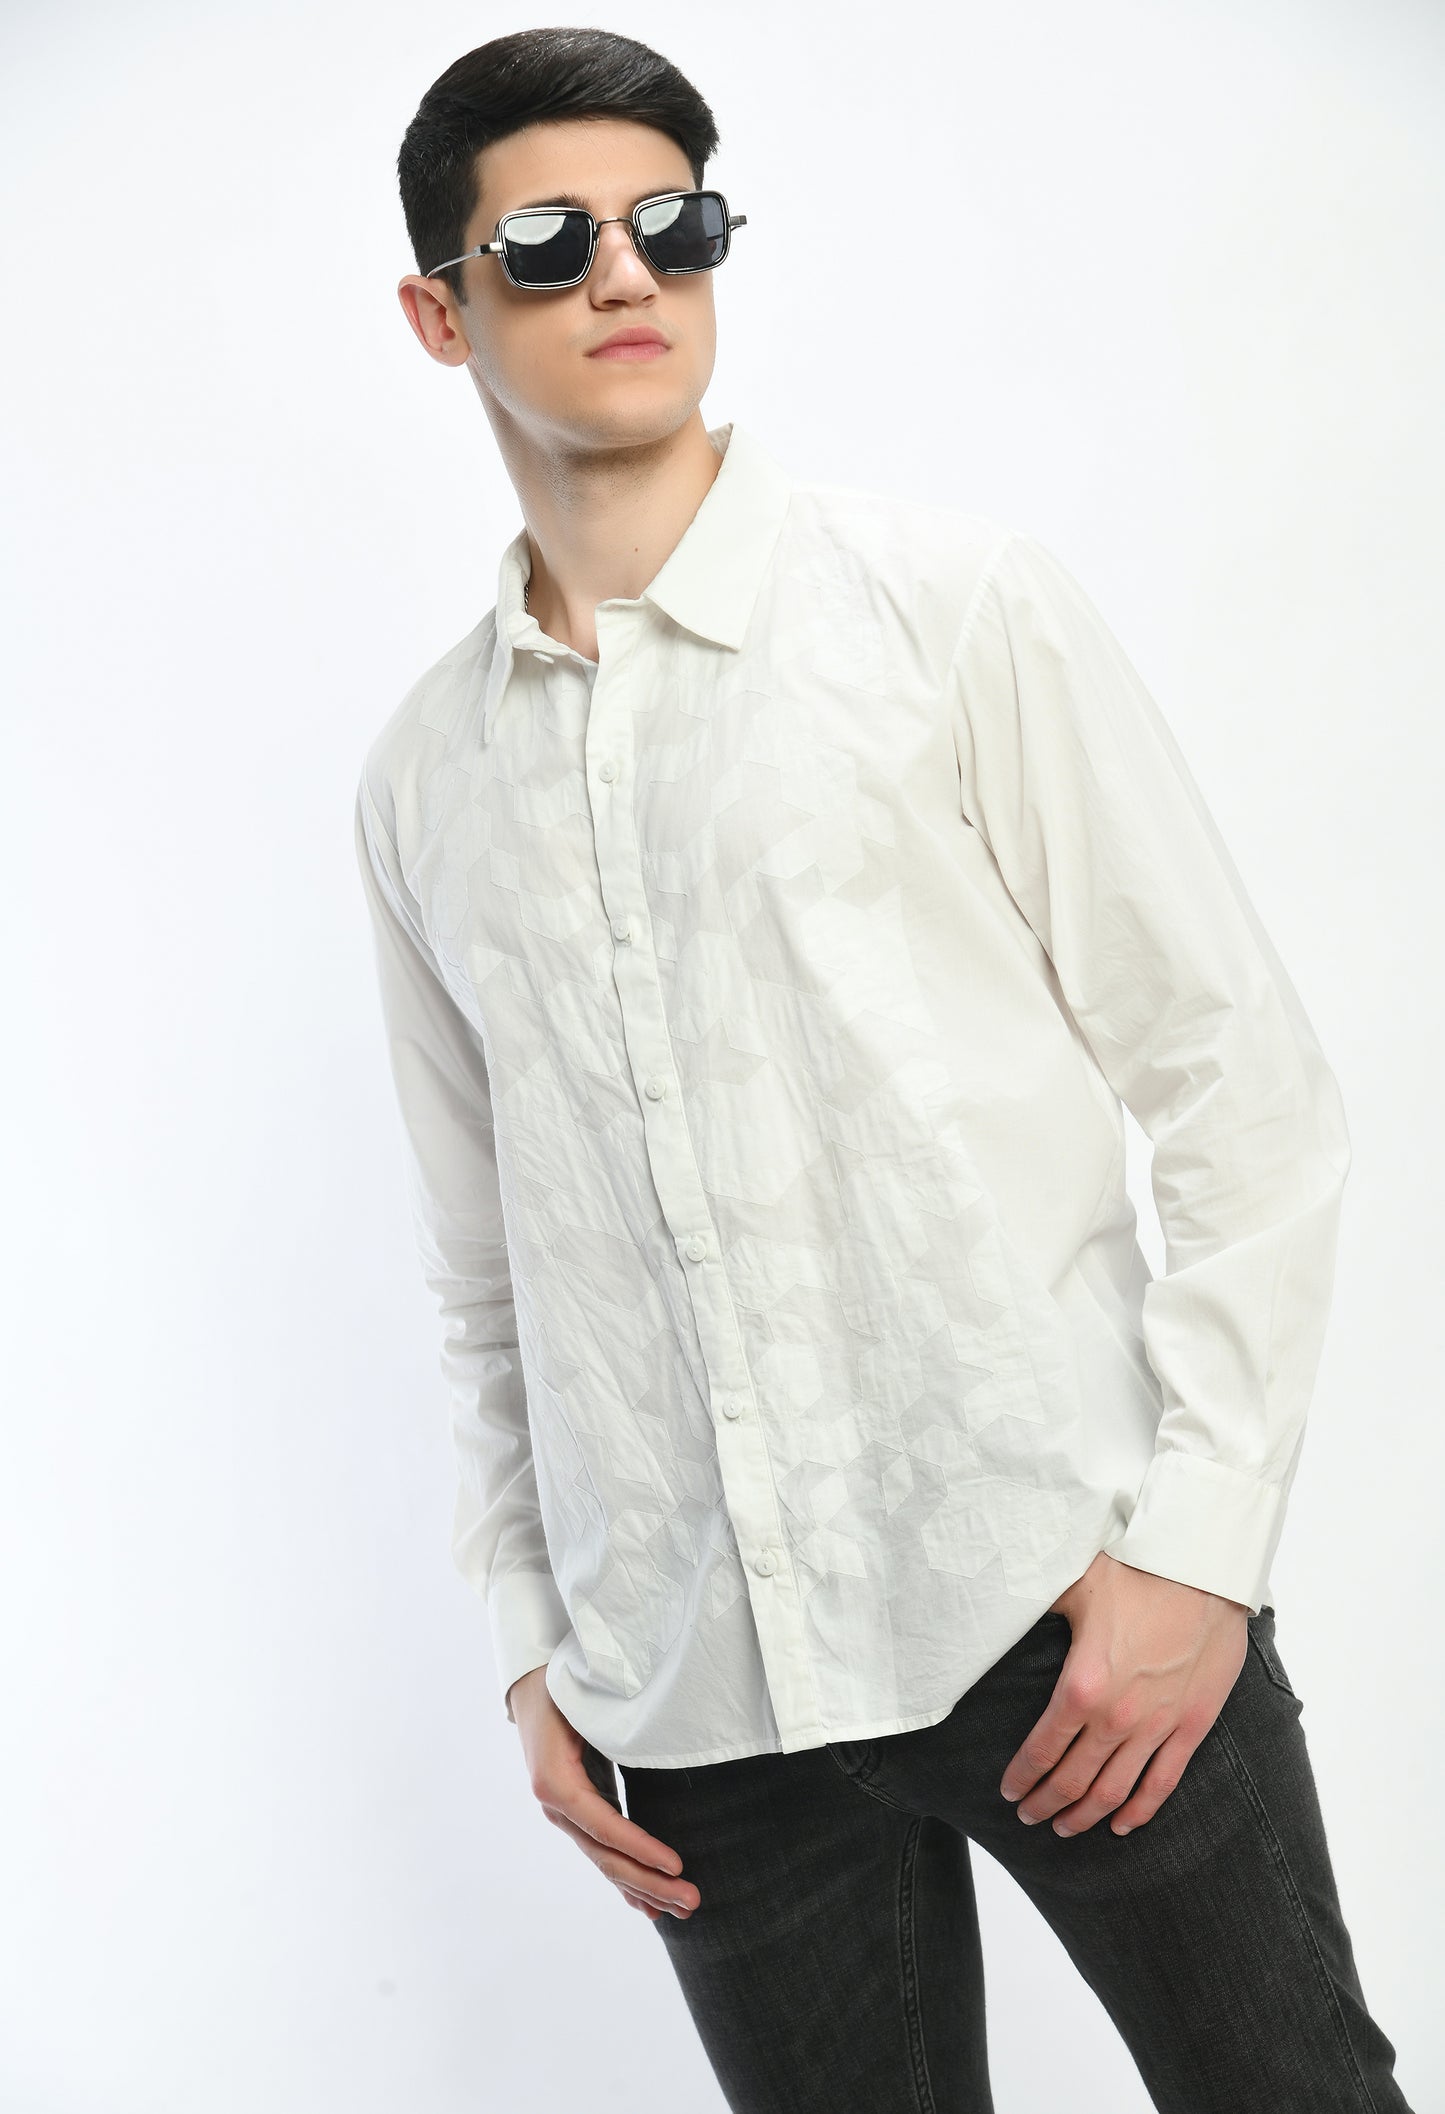 A white cotton shirt showcasing tone on tone appliqué work.